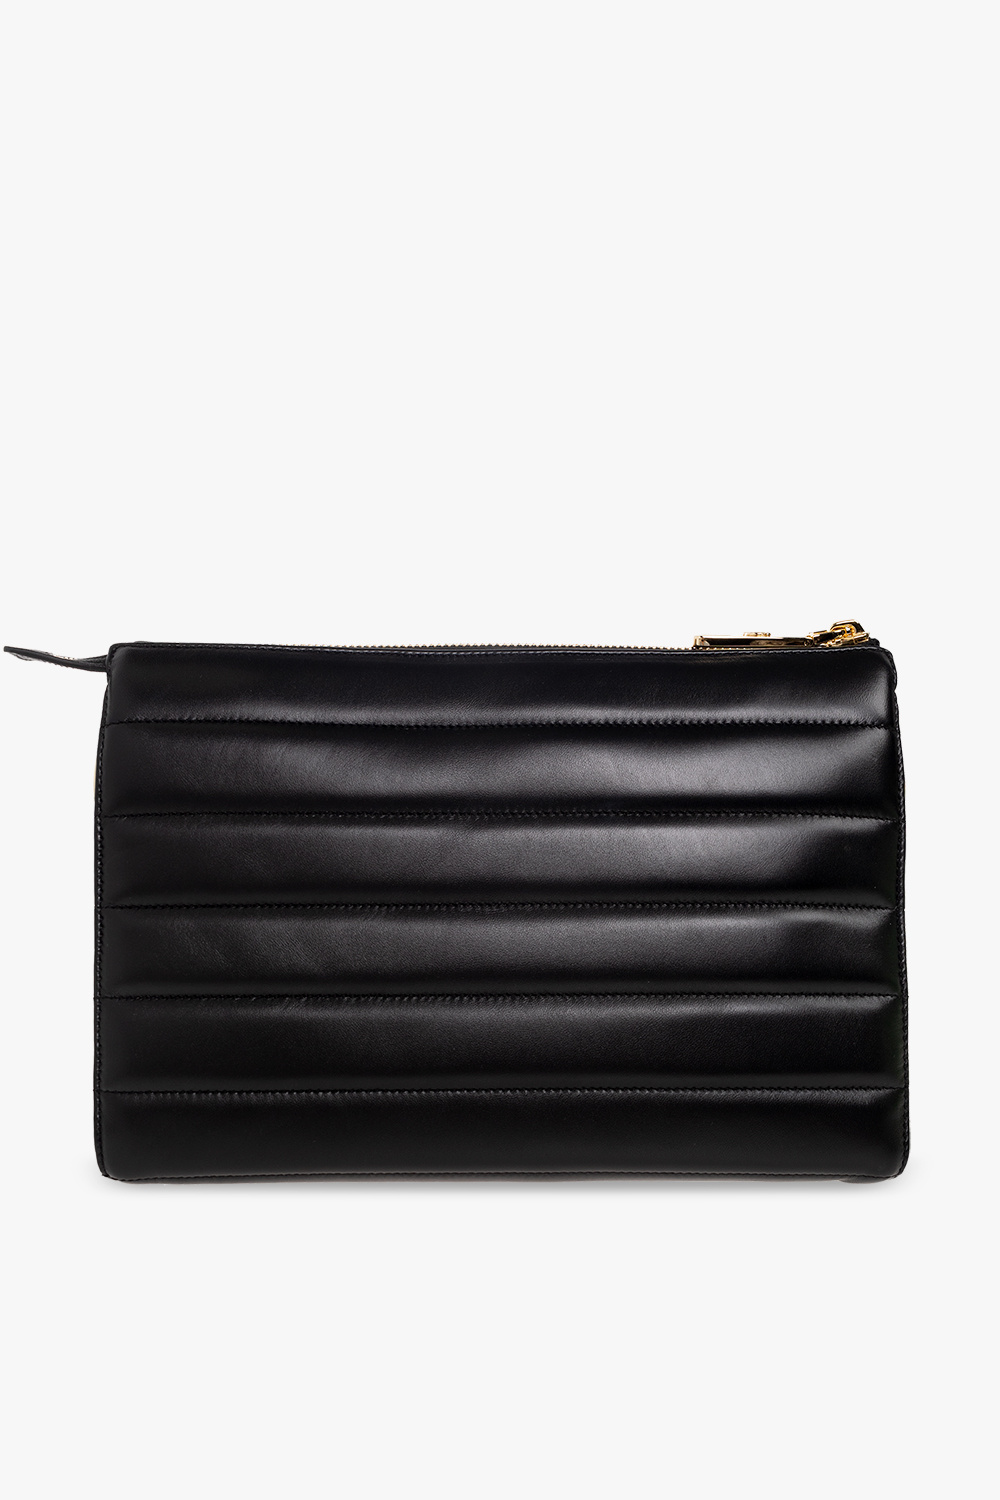 dolce space & Gabbana ‘Tris Medium’ shoulder bag